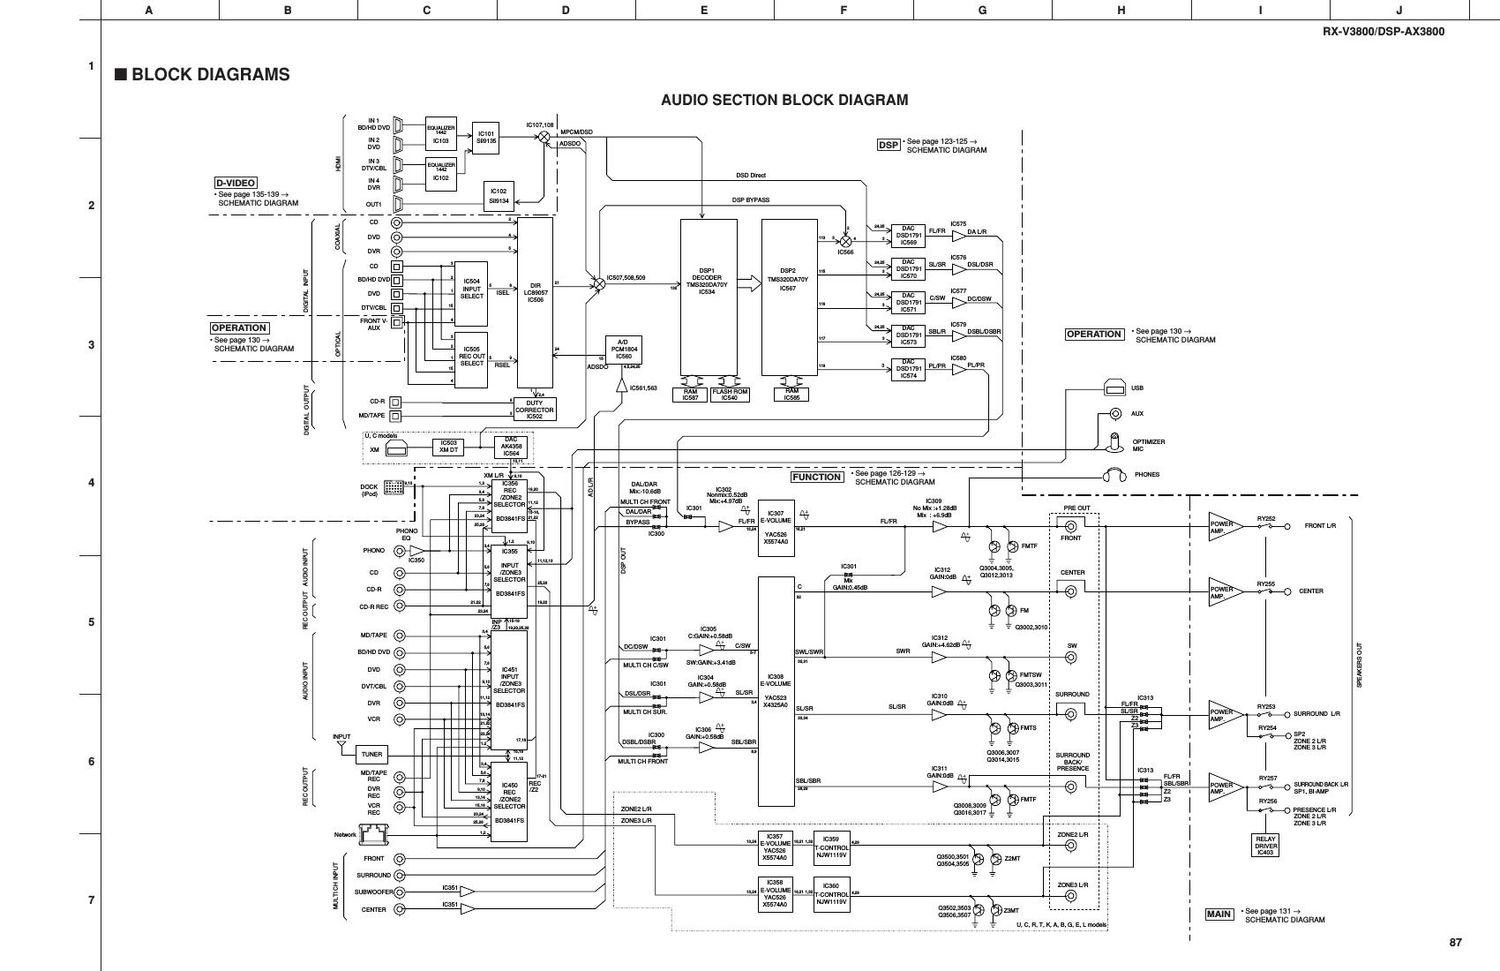 yamaha dsp ax3800 schematic